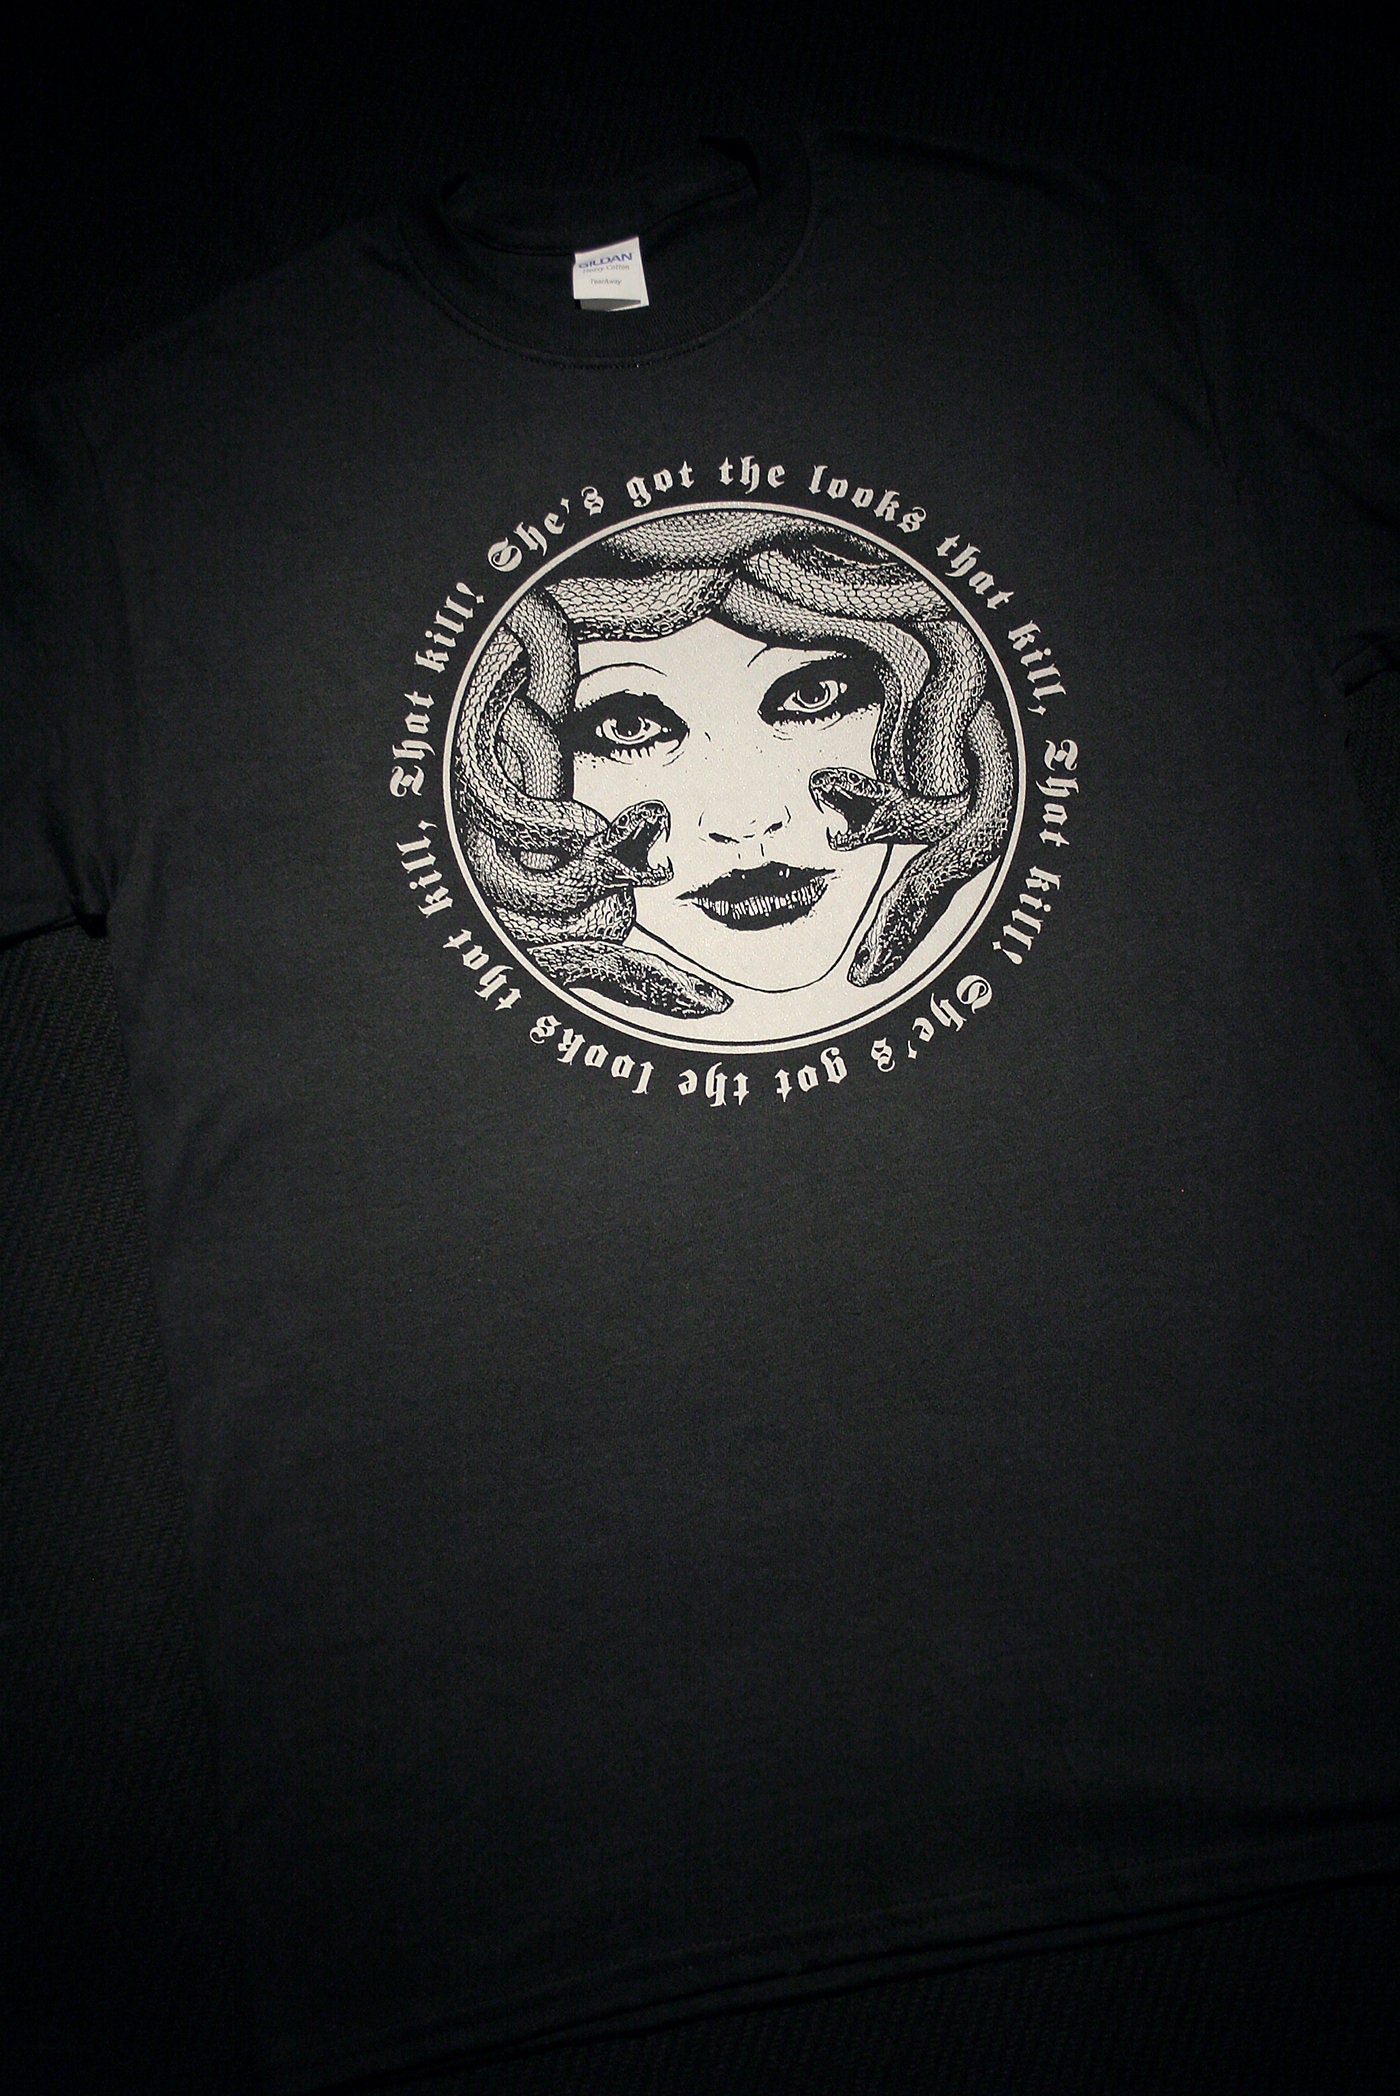 Medusa "she's got the looks that kill" - T-shirt